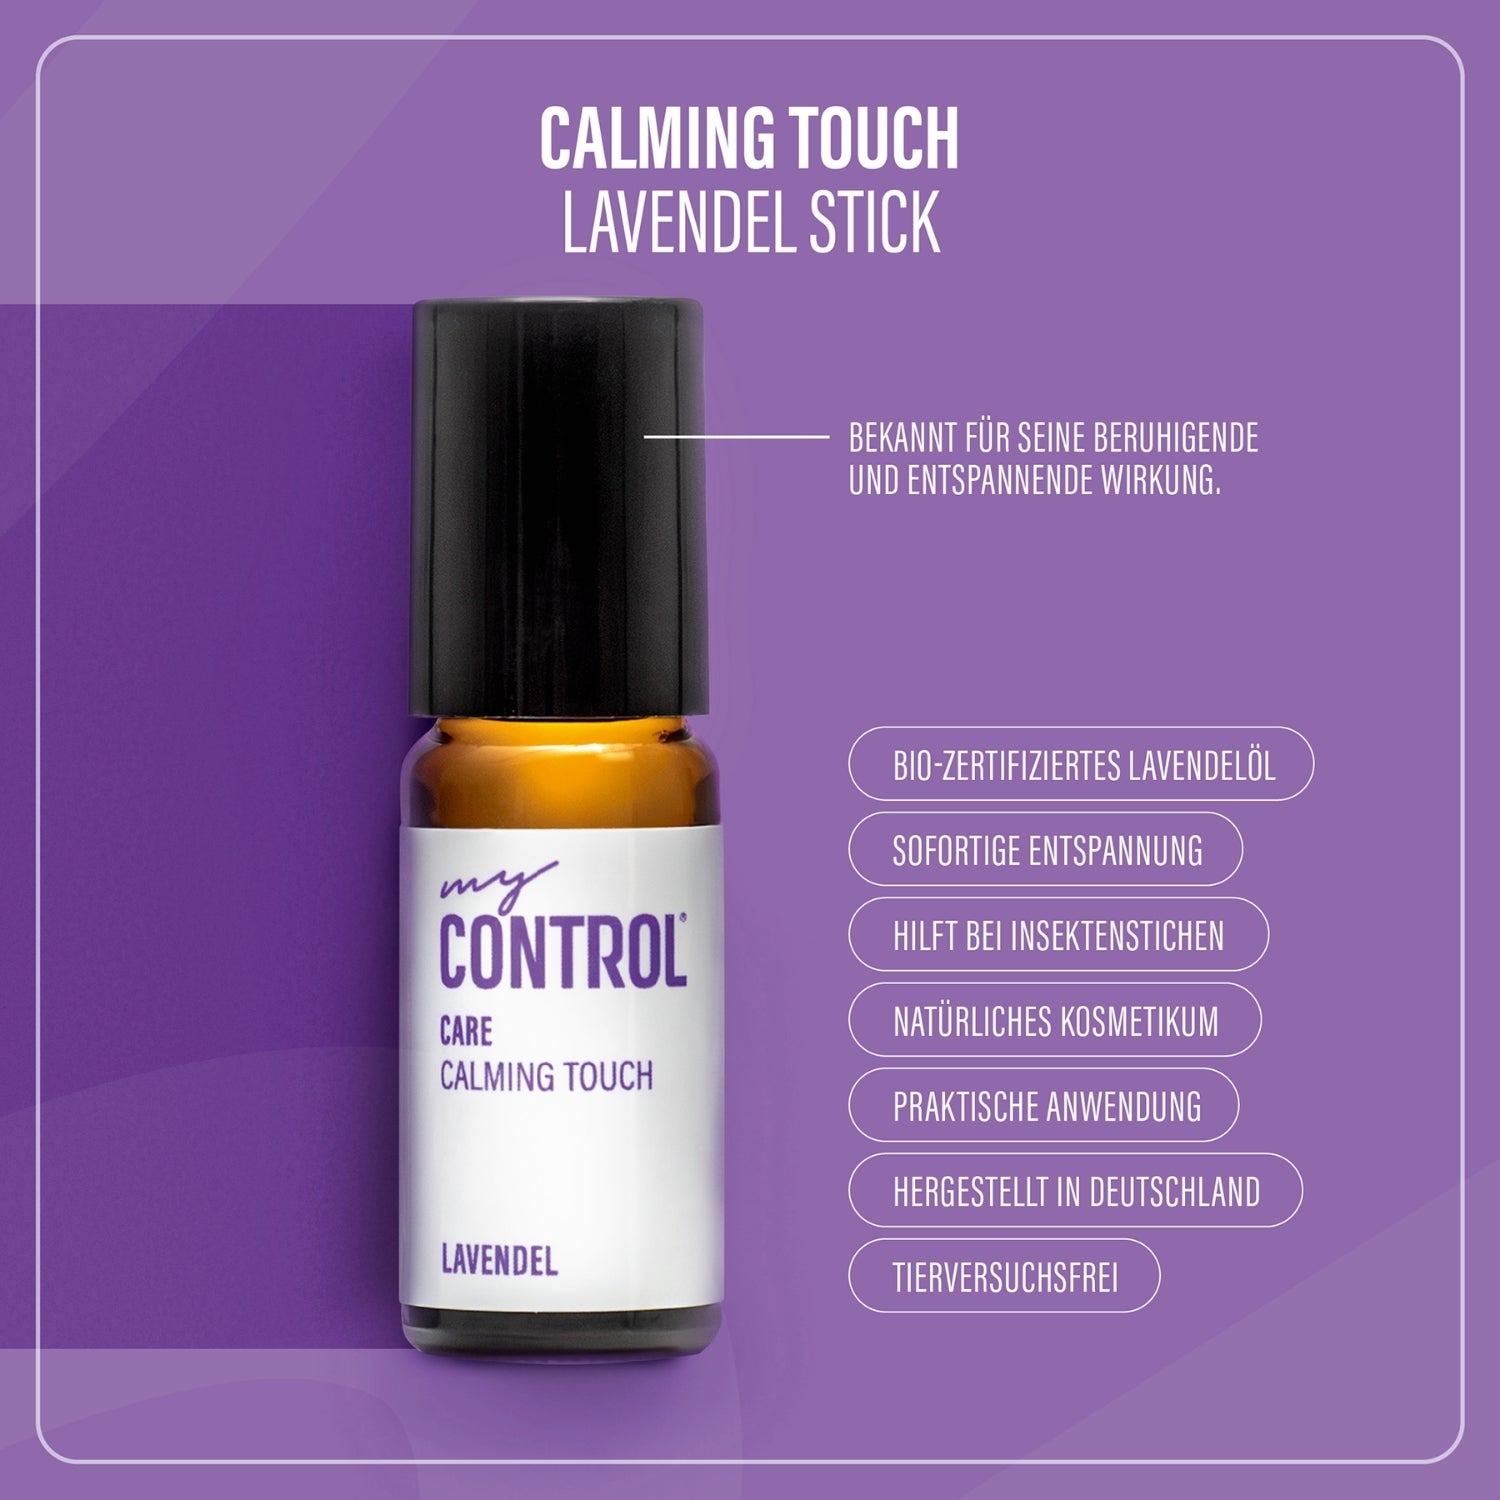 Features von Calming Touch Lavendel